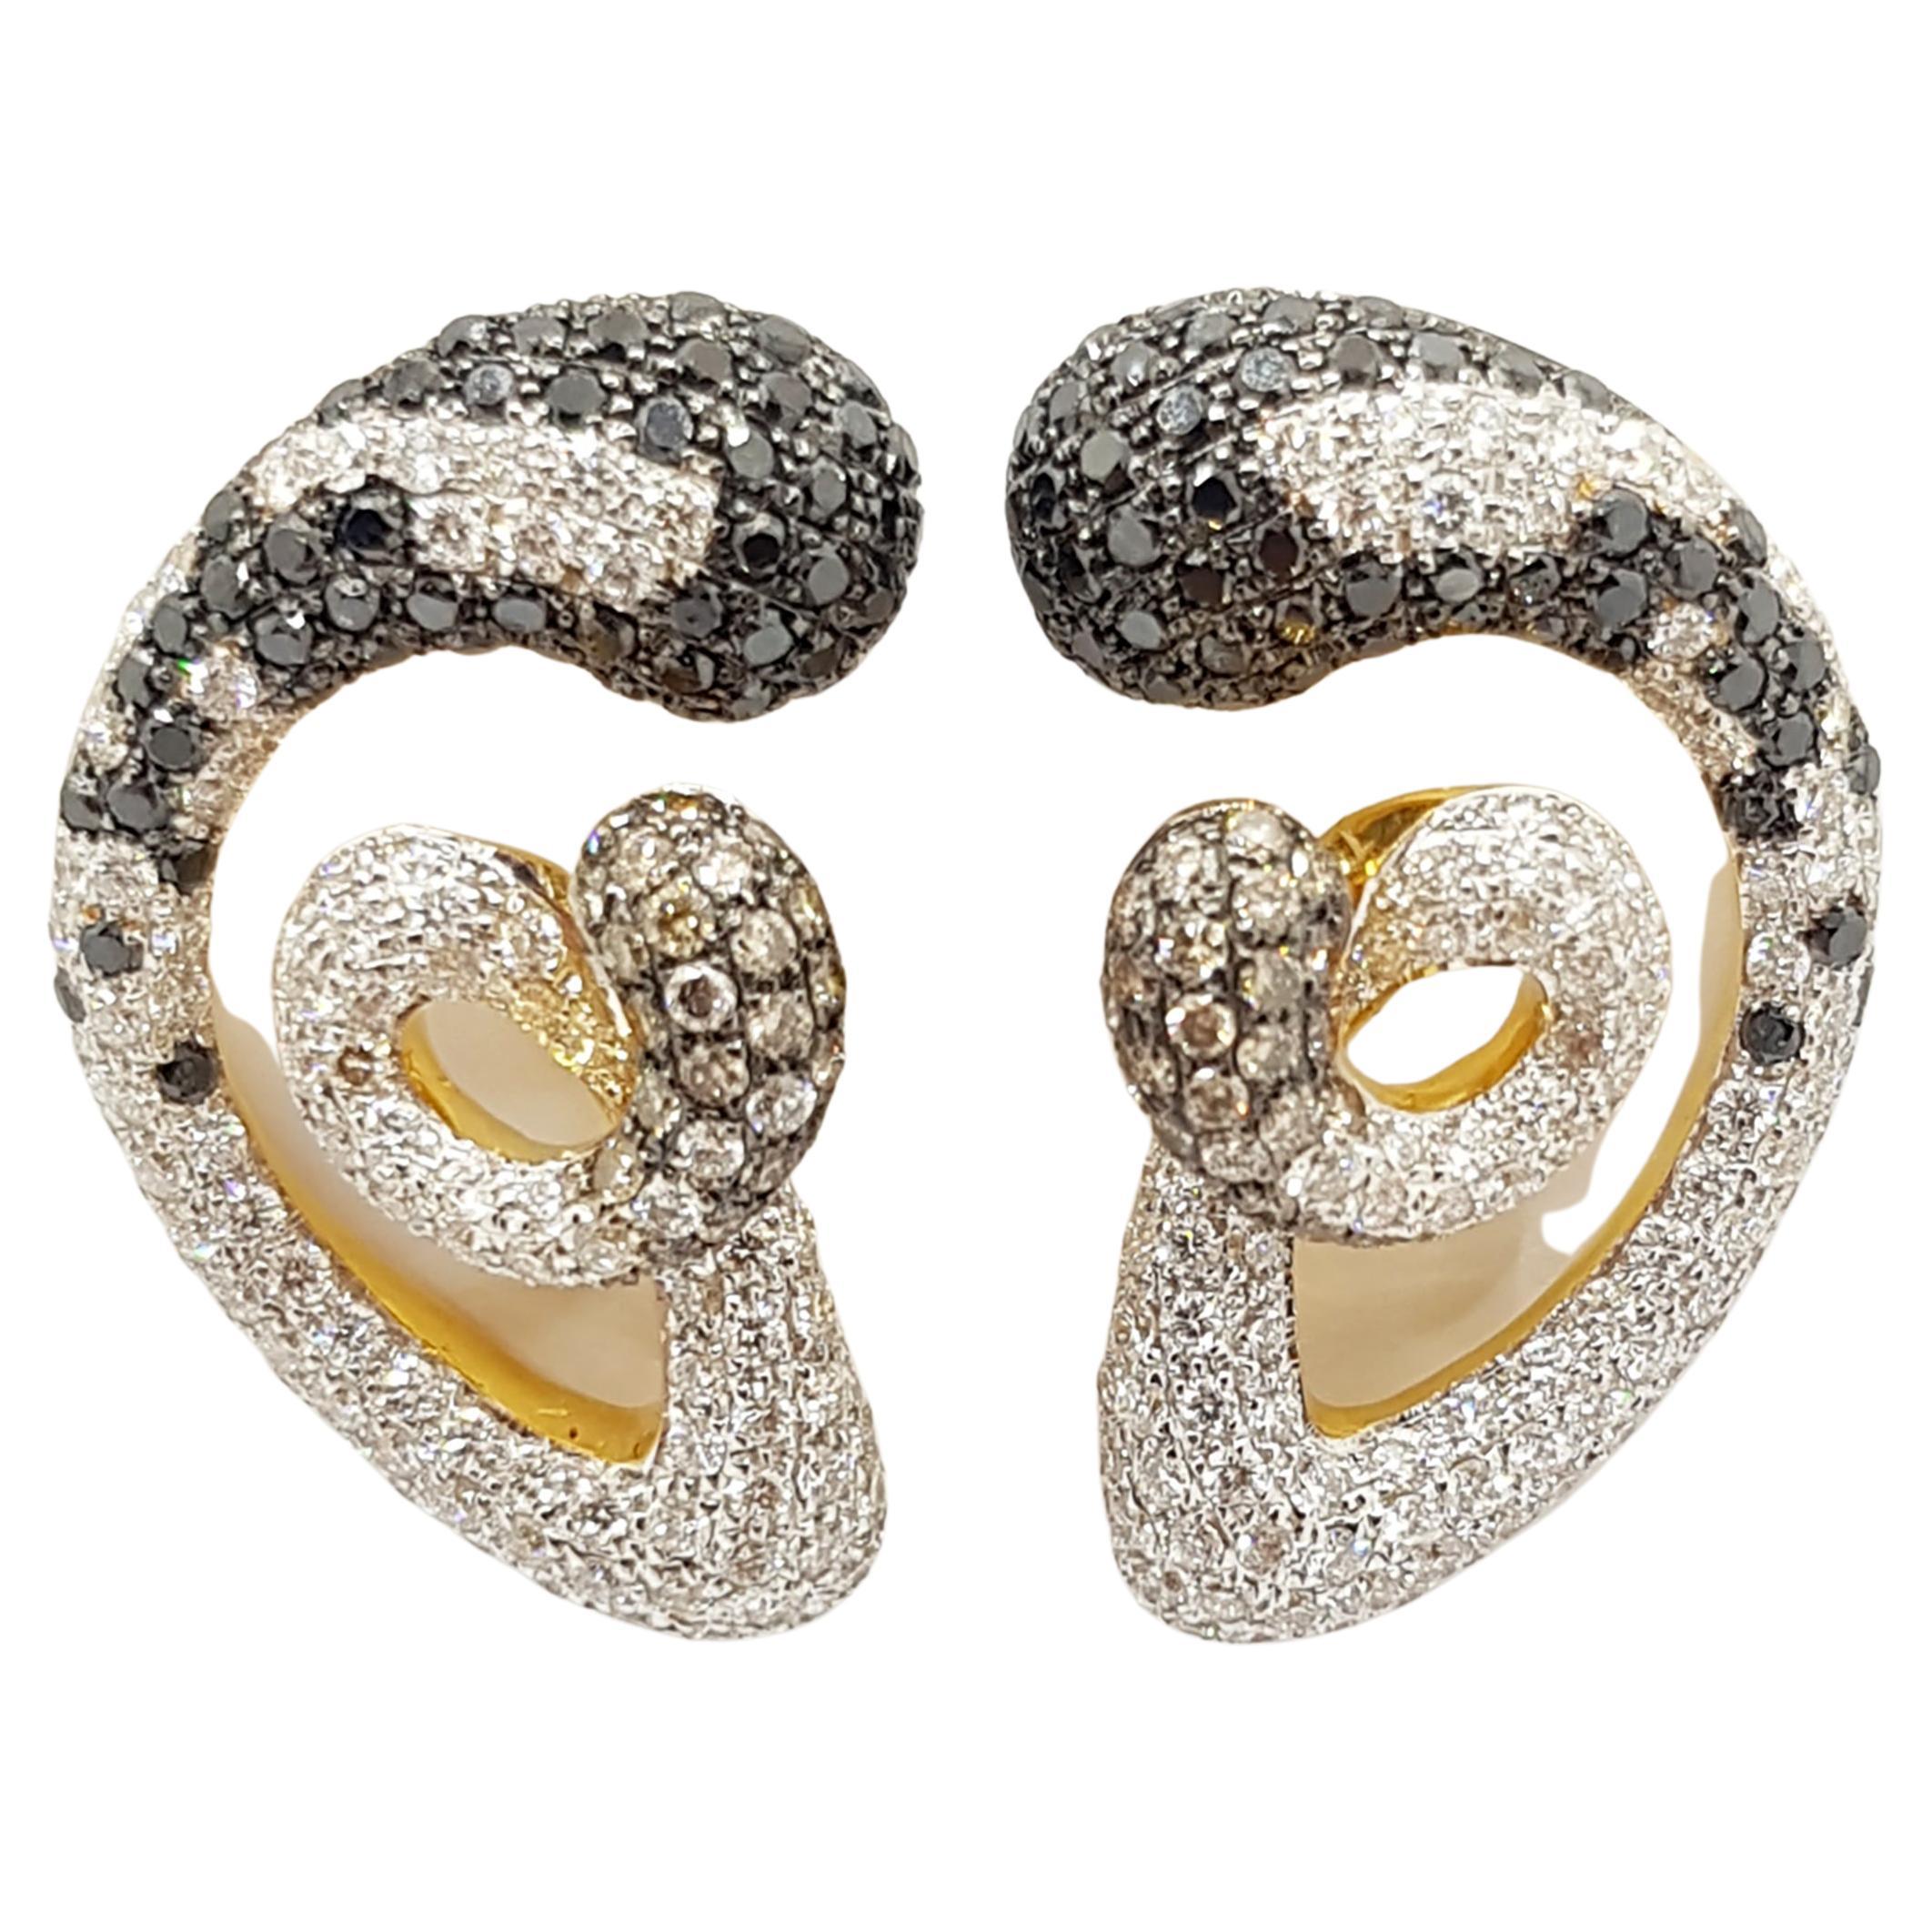 Brown Diamond 0.53 carat, Diamond 1.23 carats and Black Diamond 2.22 carats Earrings set in 18 Karat Gold Settings

Width:  1.7 cm 
Length:  3.0 cm
Total Weight: 15.07 grams

